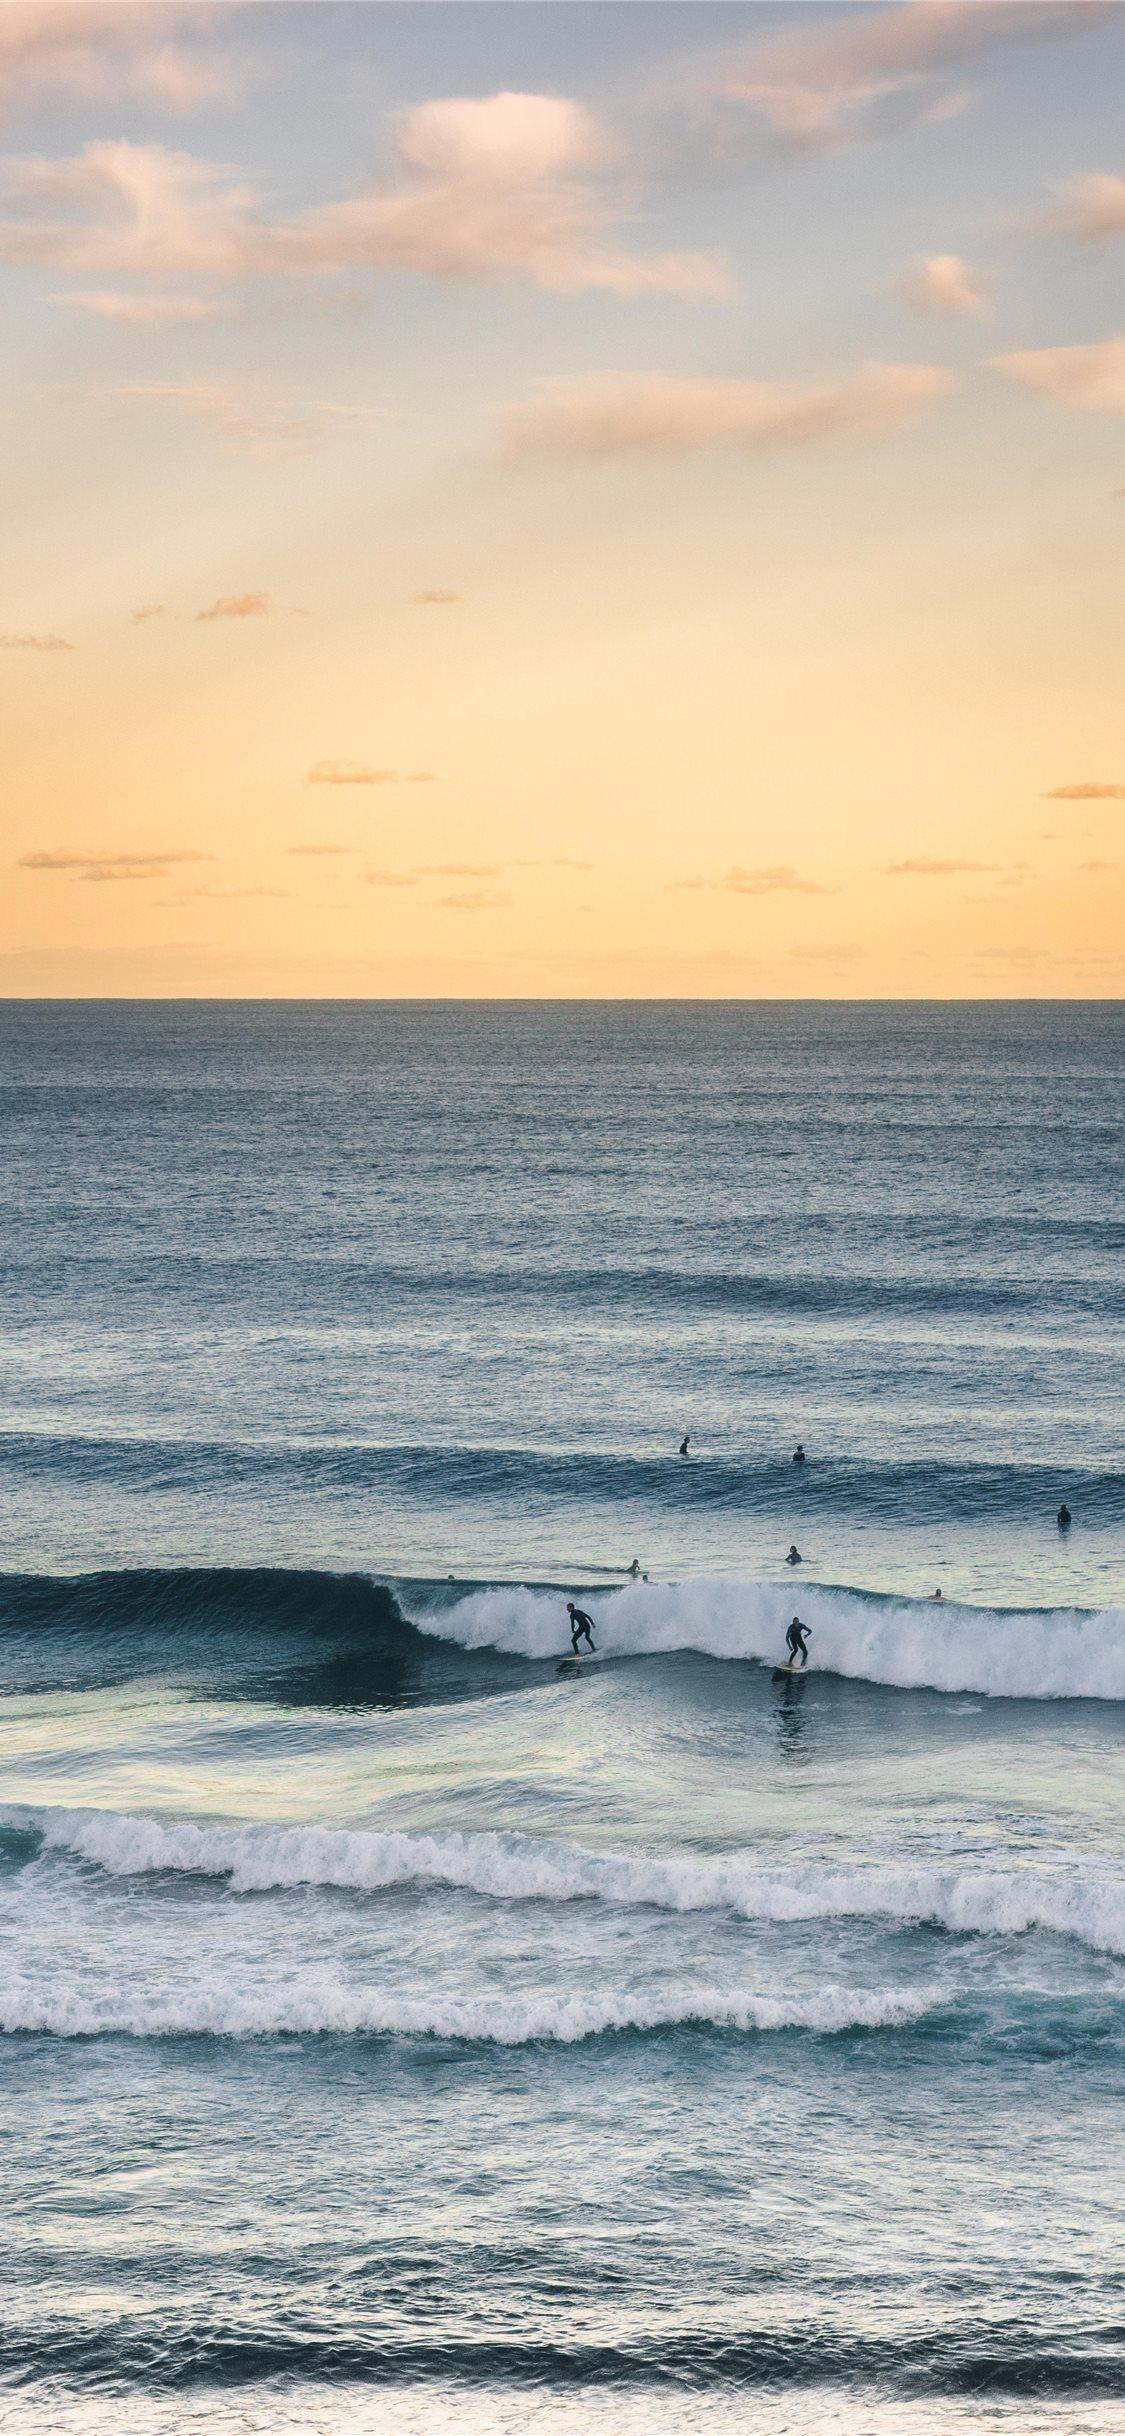 Surfing in Australia iPhone X Wallpaper Free Download